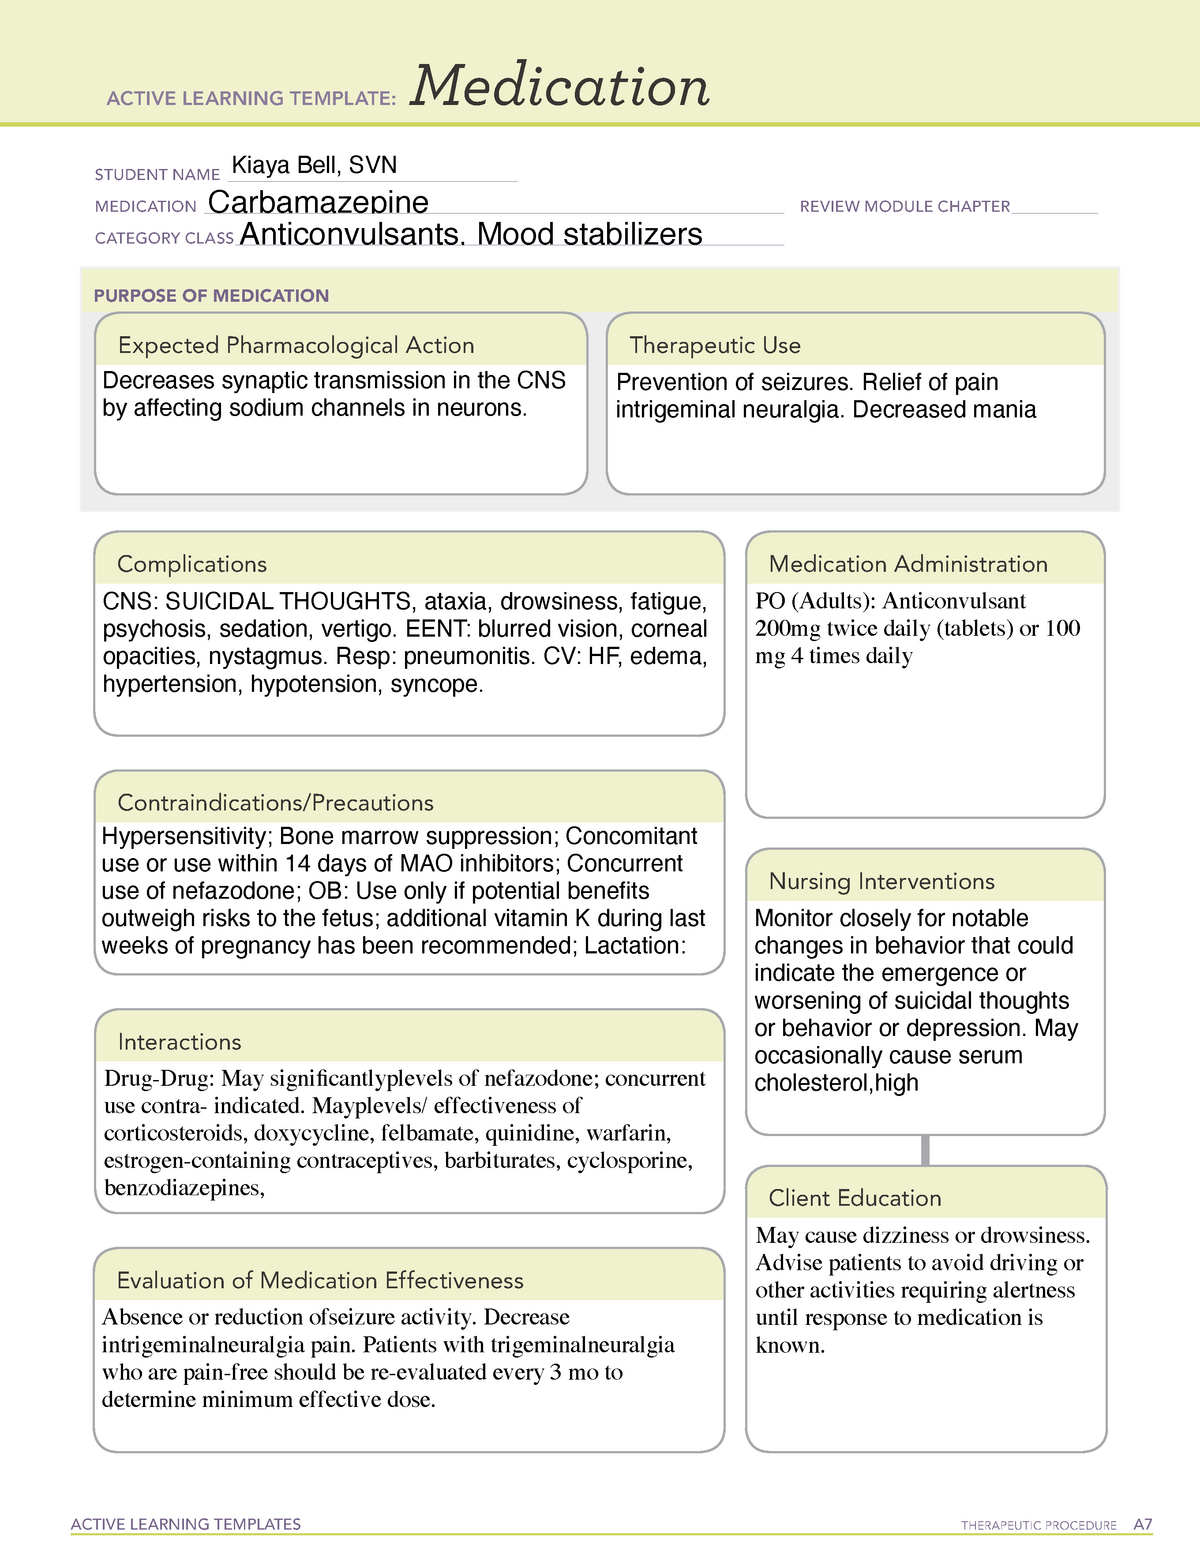 carbamazepine medication template